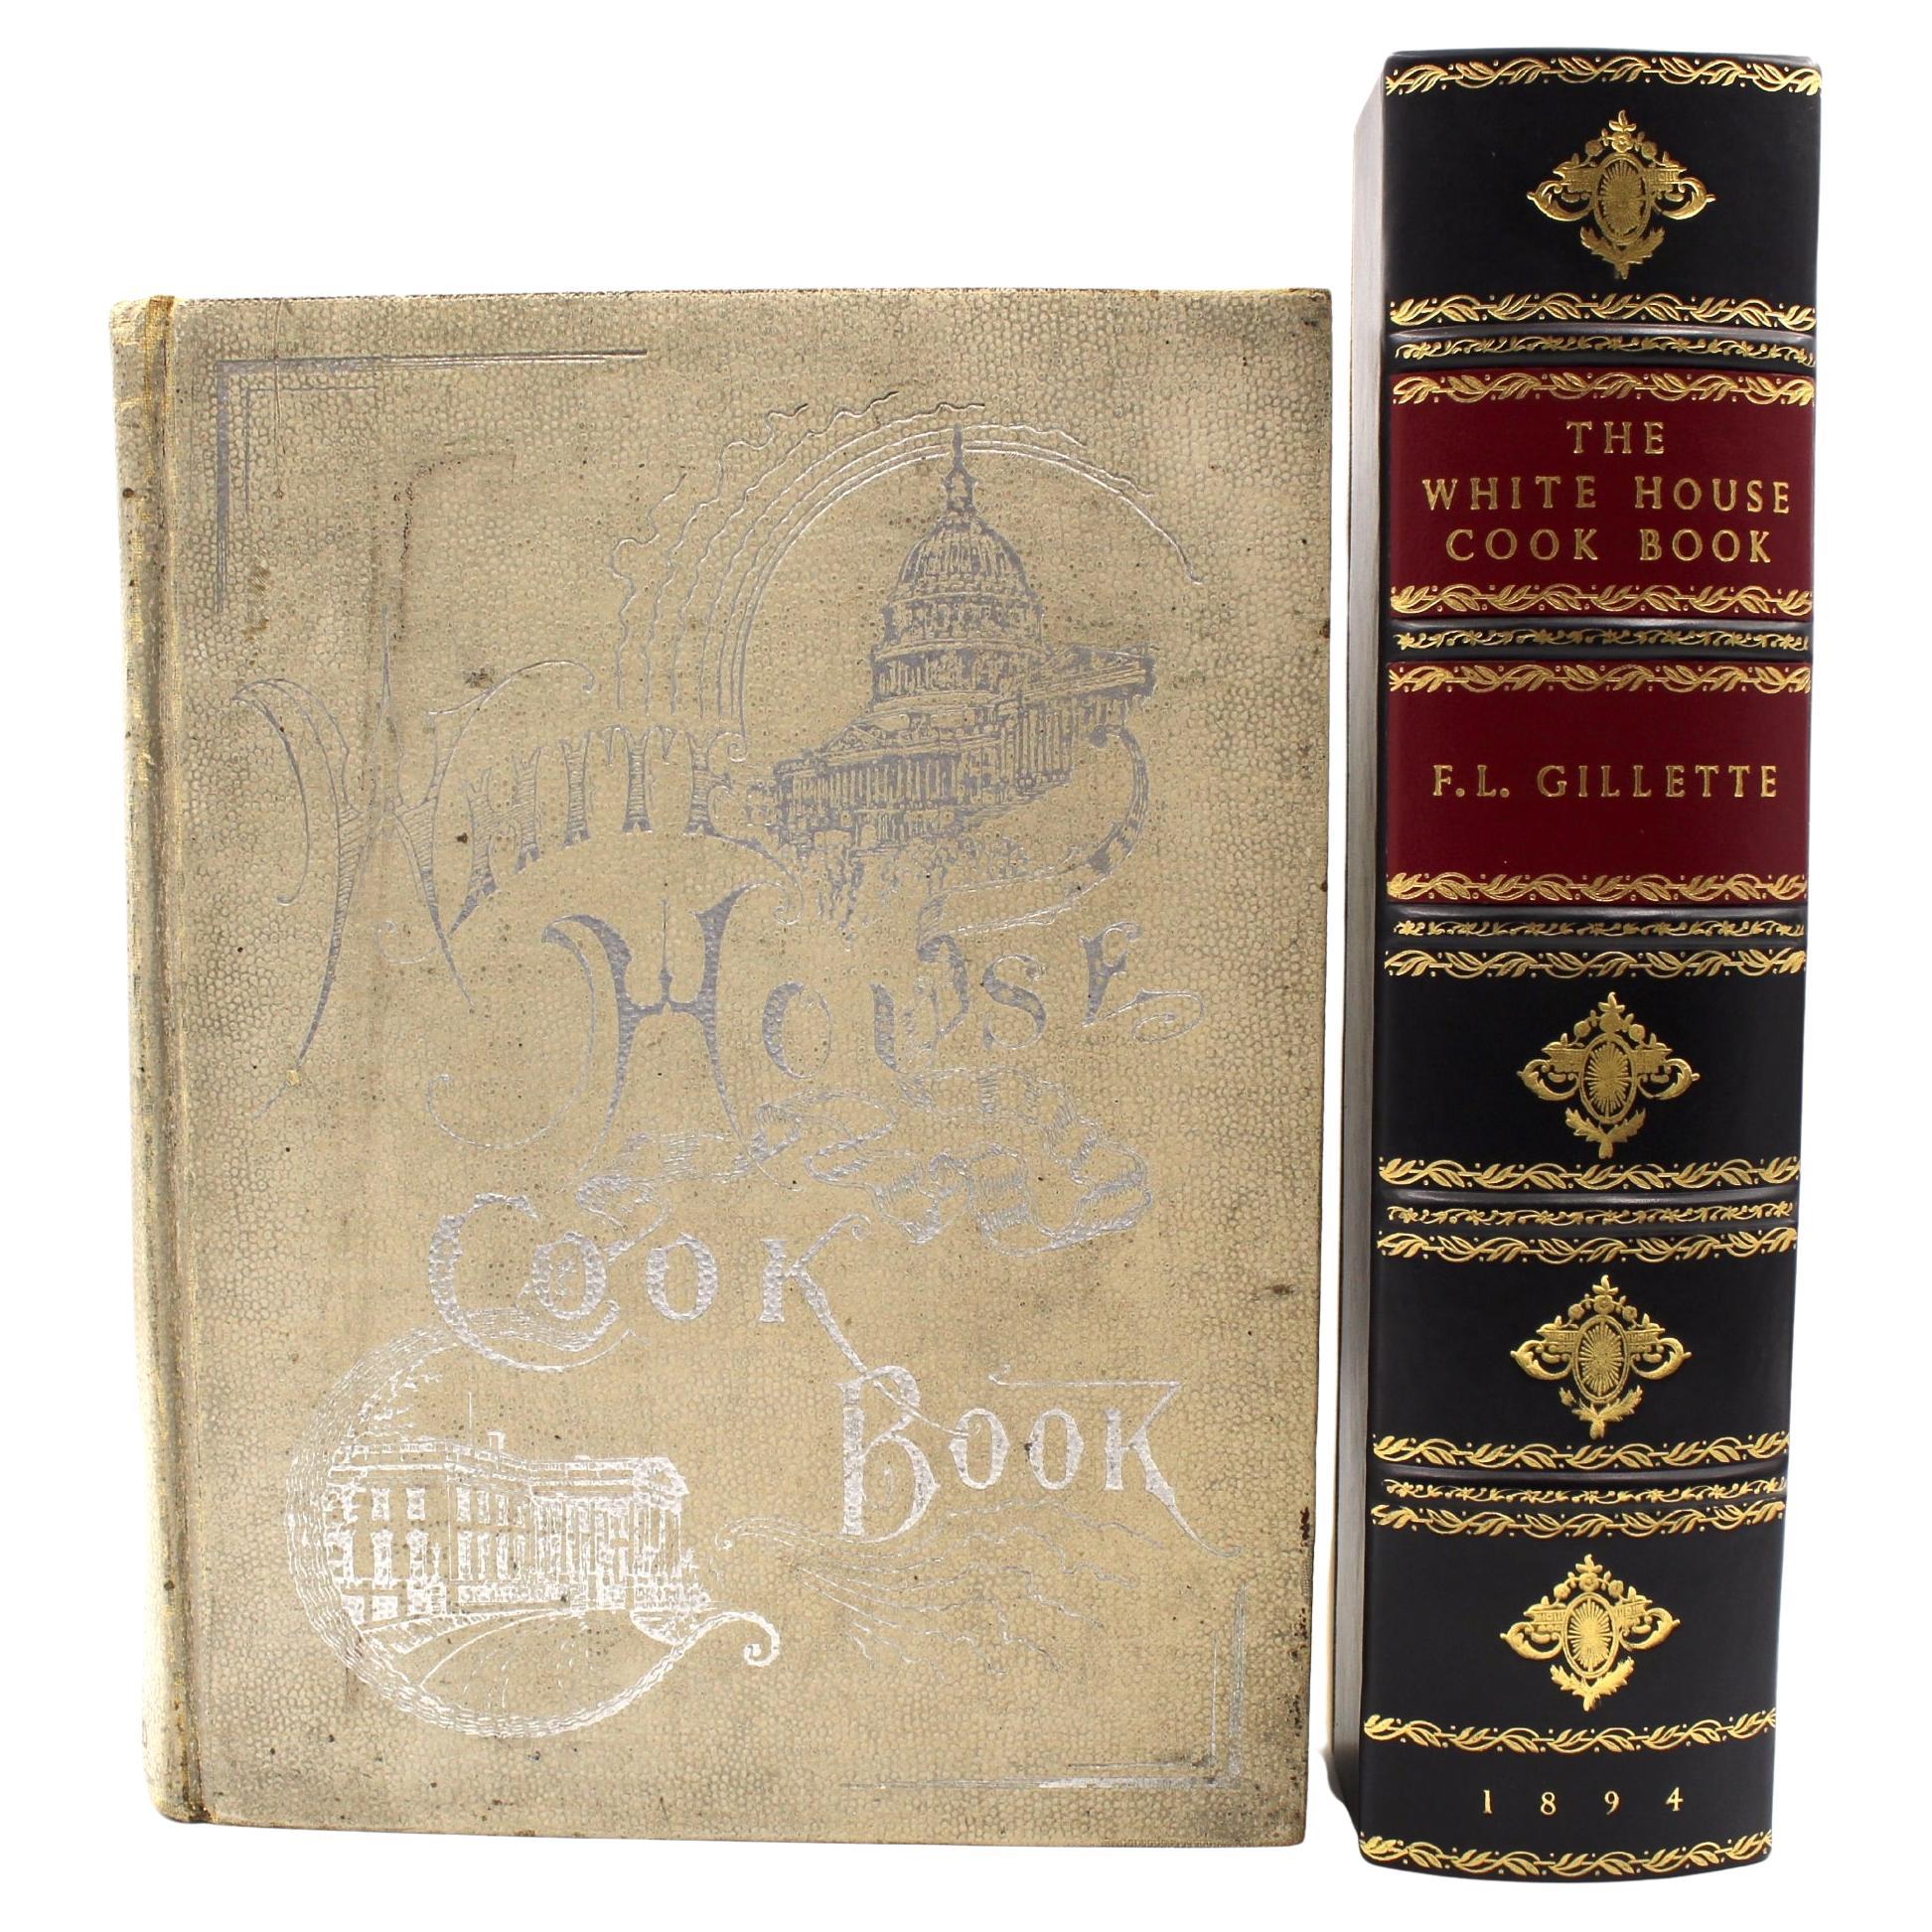 Livre « The White House Cookbook by F. L. Gillette, Plus tard Impression, 1894